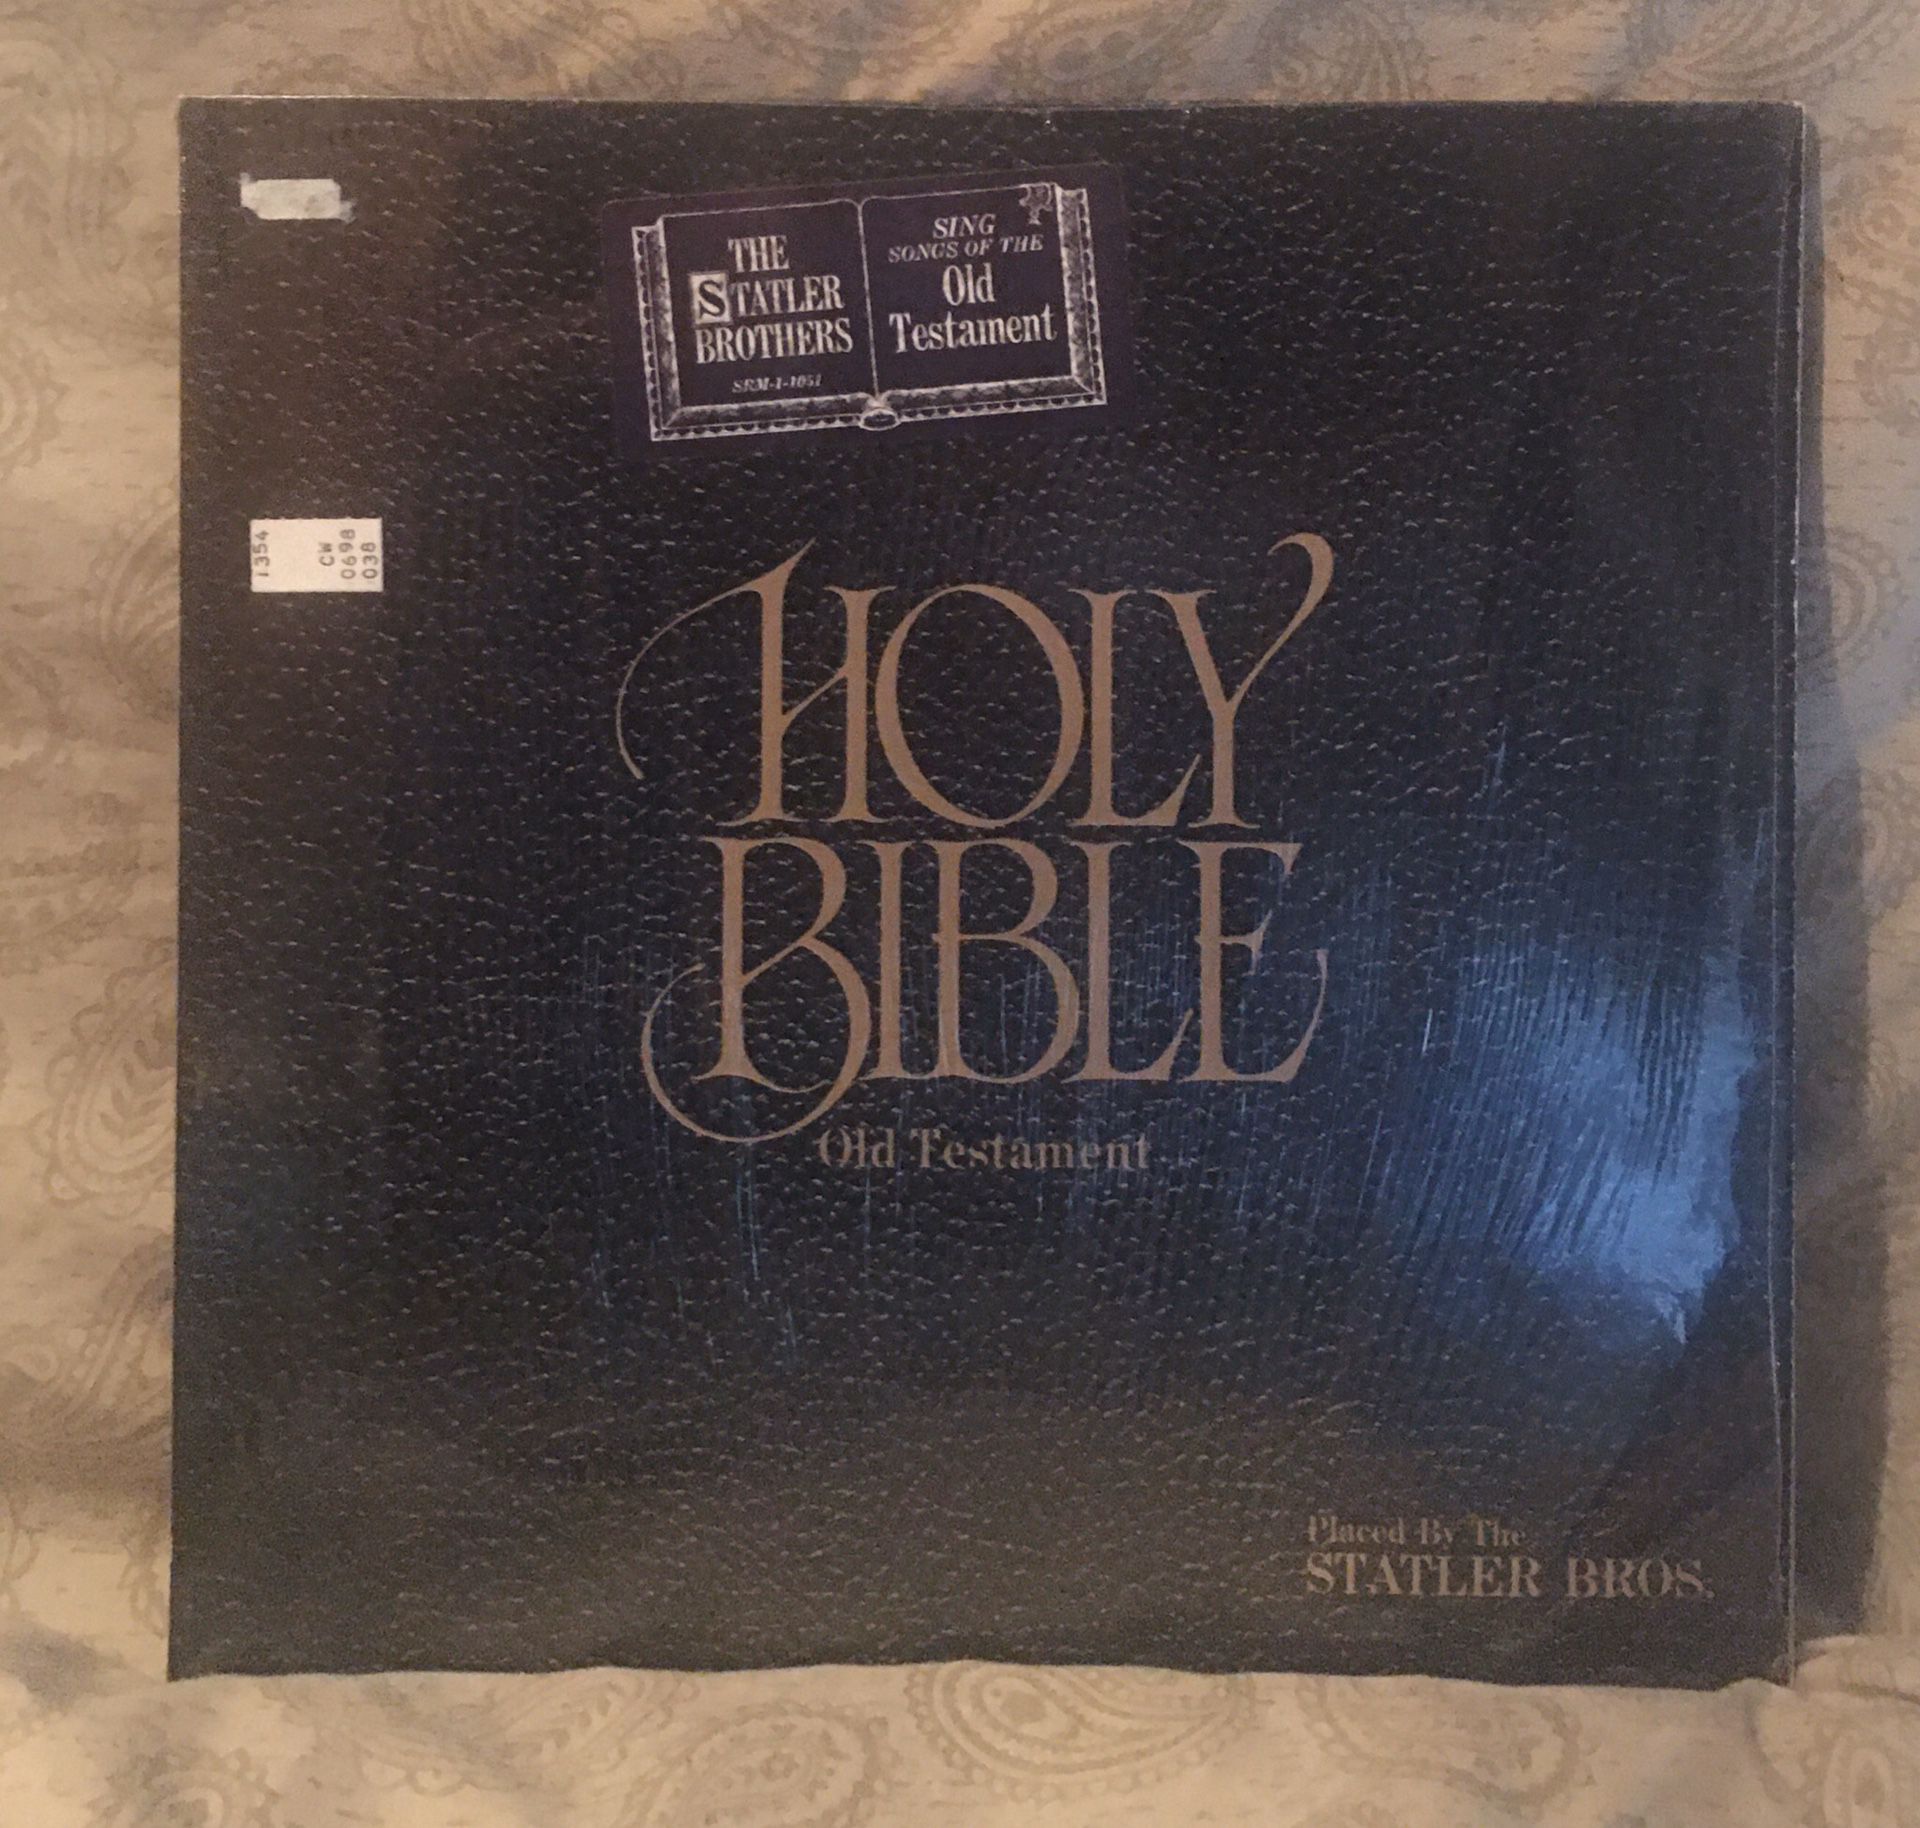 Holy Bible Old Testament Vinyl LP Album